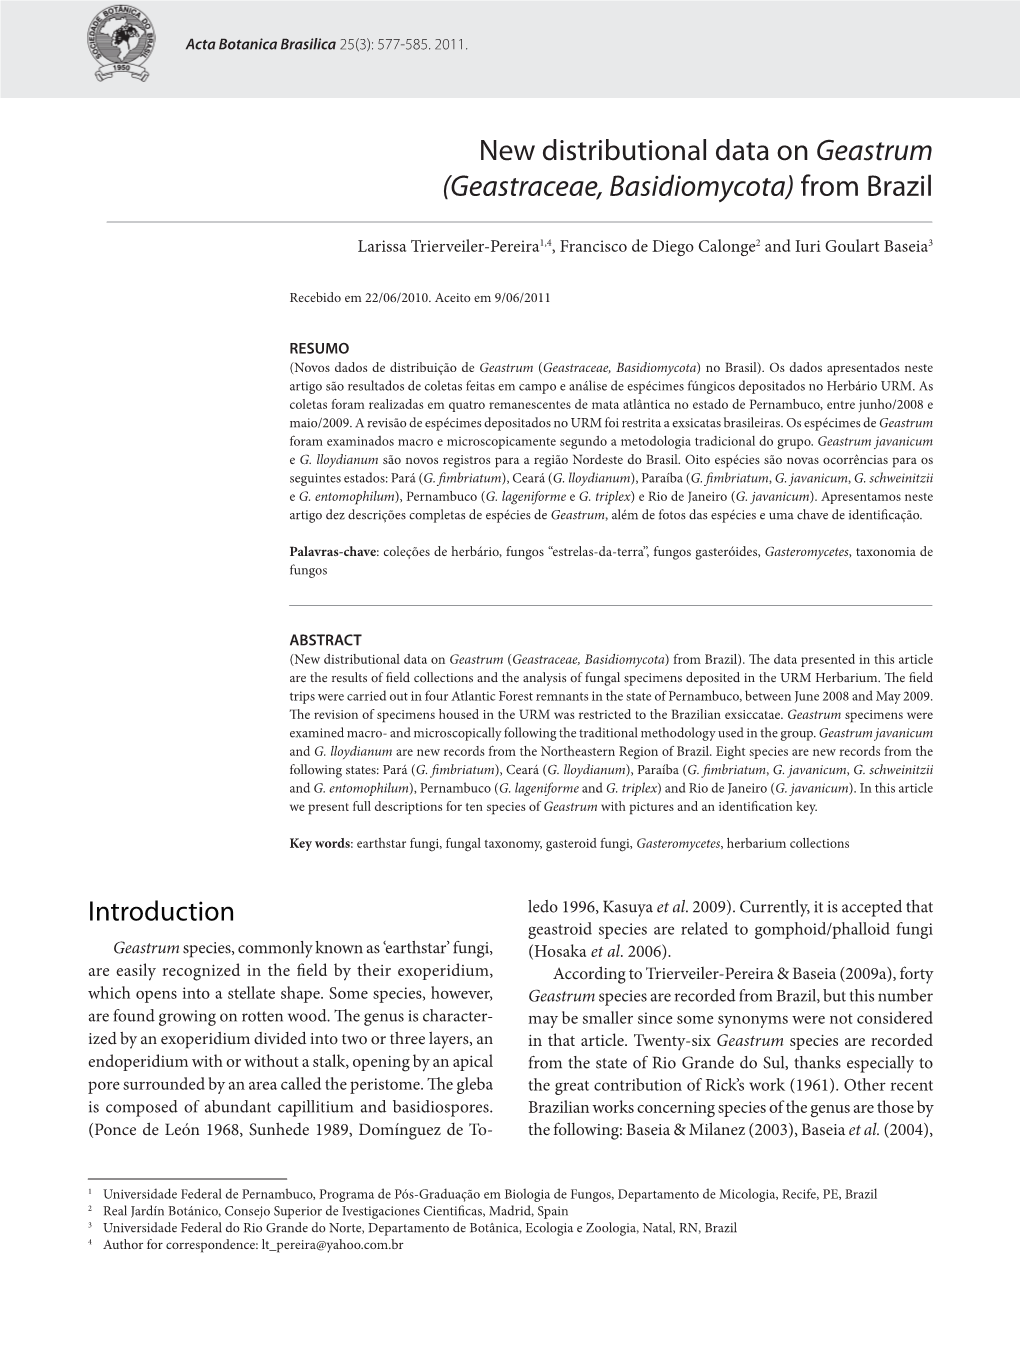 New Distributional Data on Geastrum (Geastraceae, Basidiomycota) from Brazil